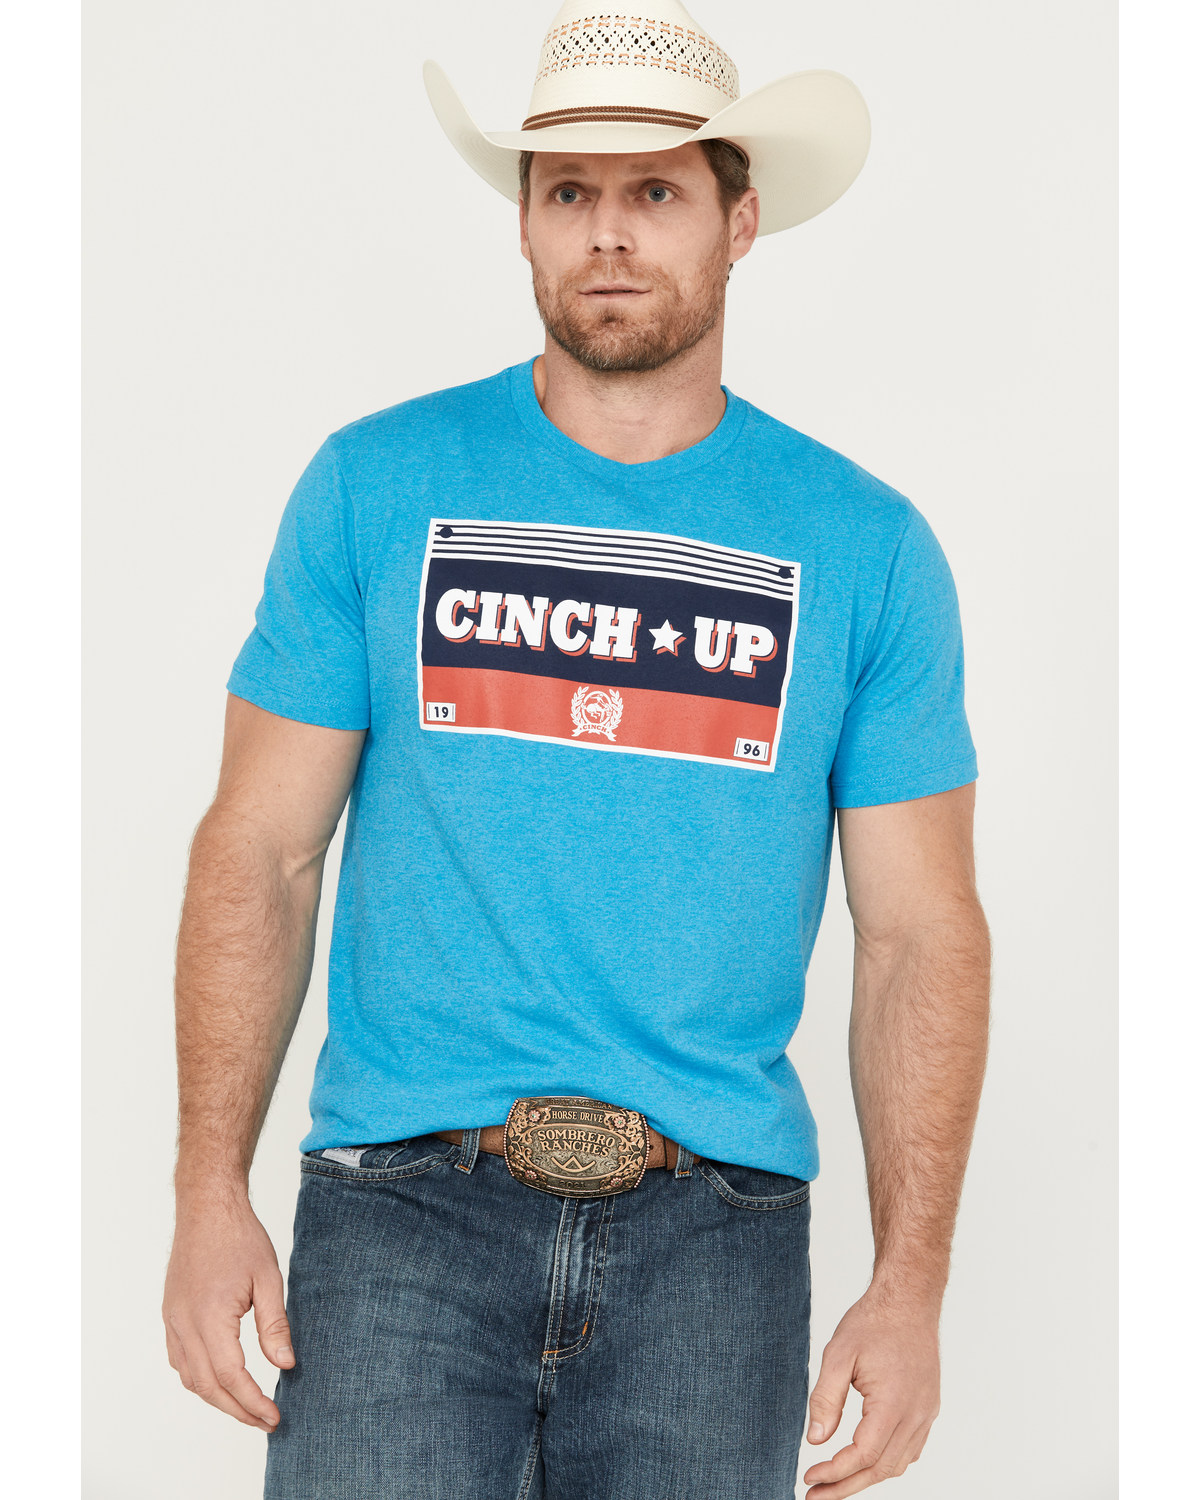 Cinch Men's Up Short Sleeve Graphic T-Shirt